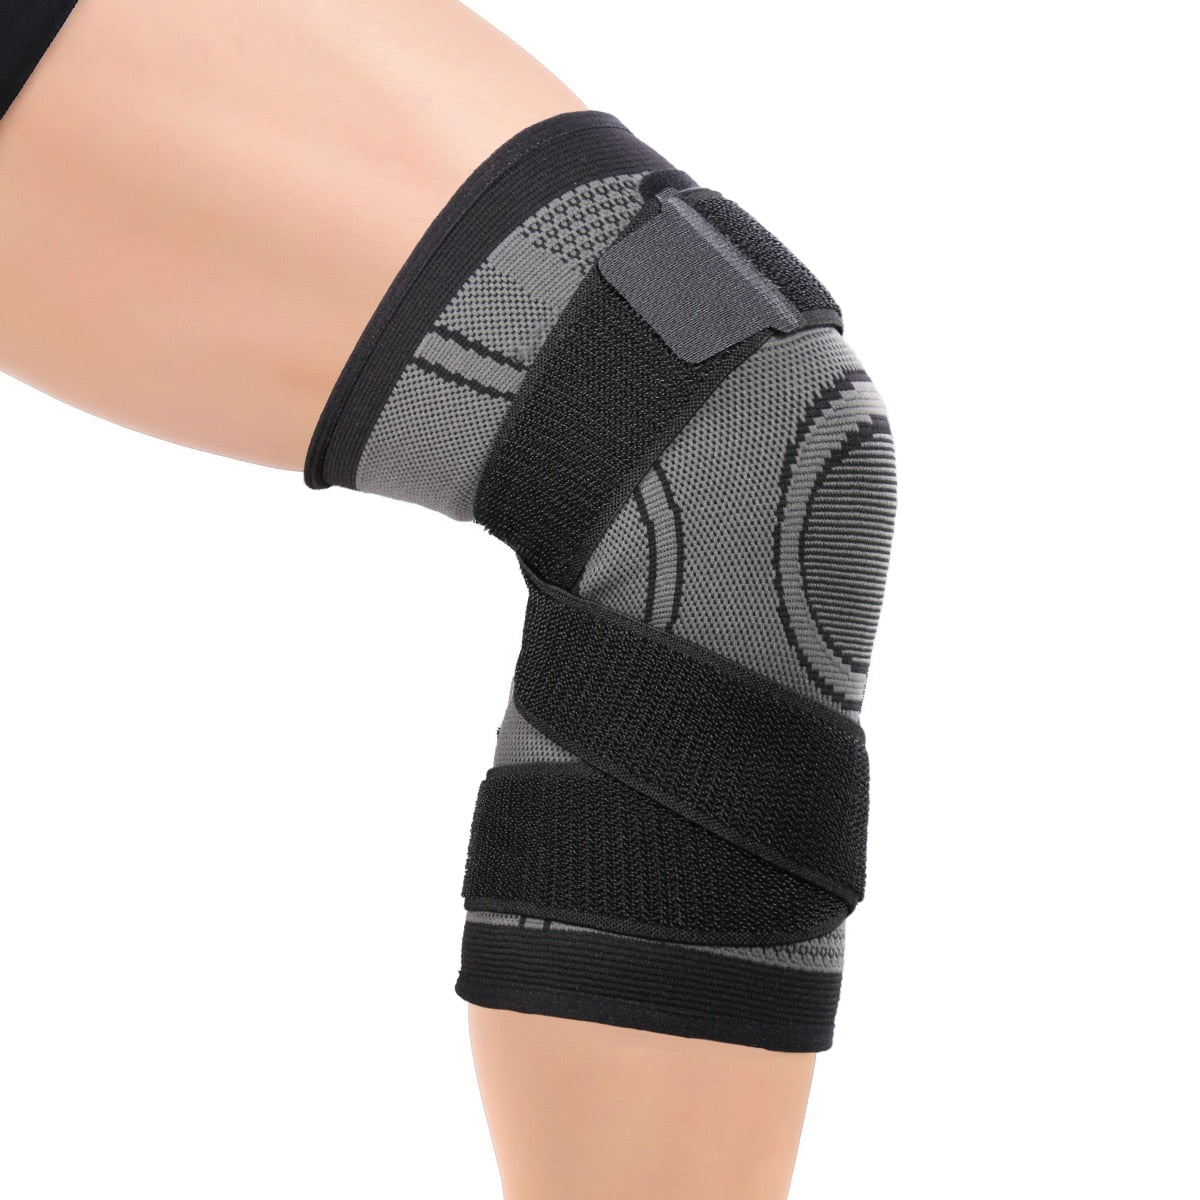 knee brace - compression knee support, elastic sleeve, patellar tendon, velcro strap, arthritis, meniscus, osteoarthritis, acl